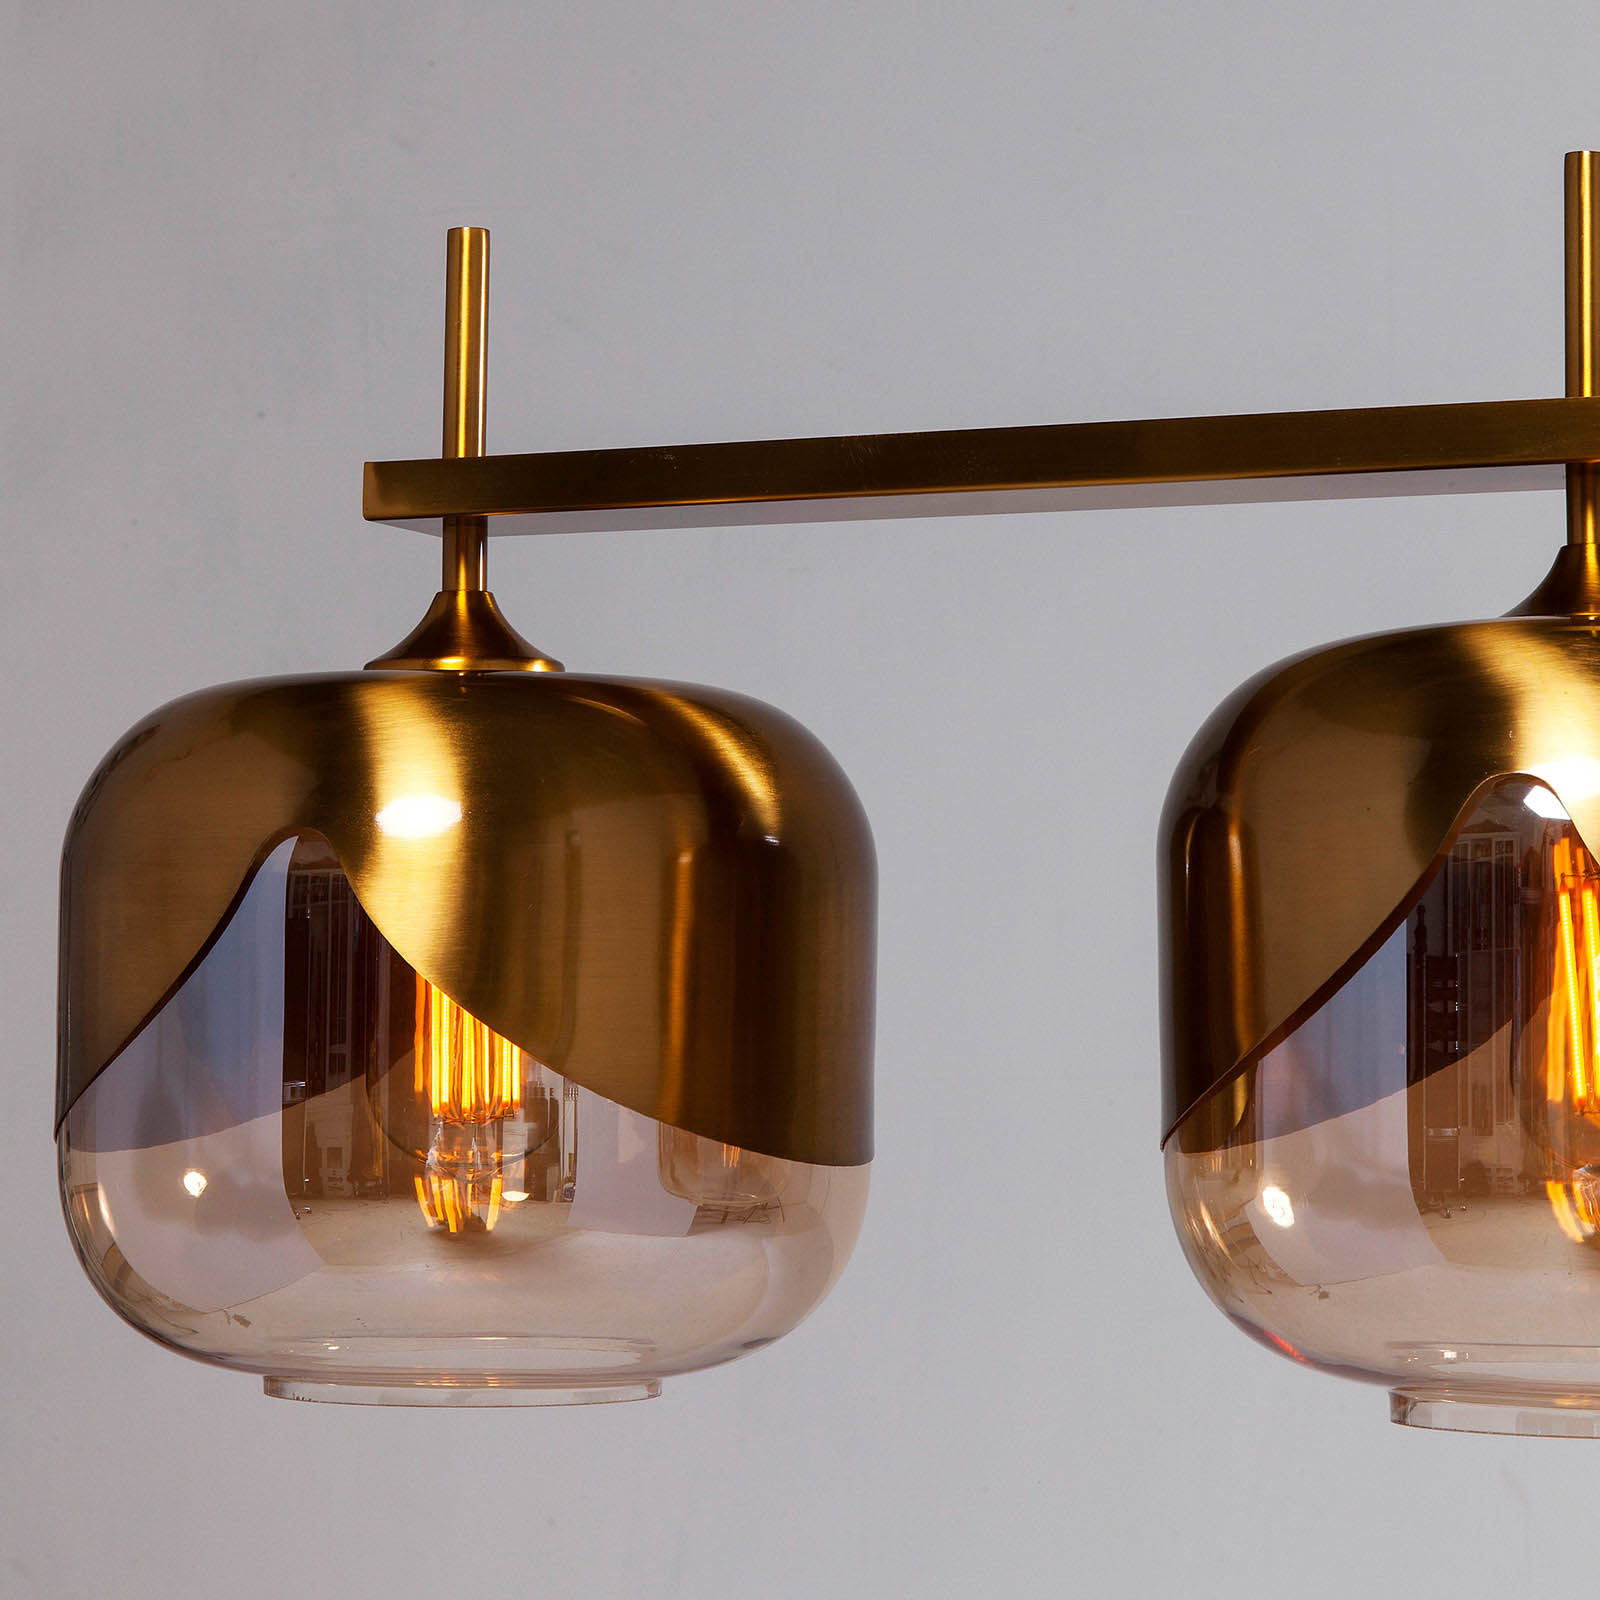 KARE Golden Goblet Quattro Suspension à 4 lampes